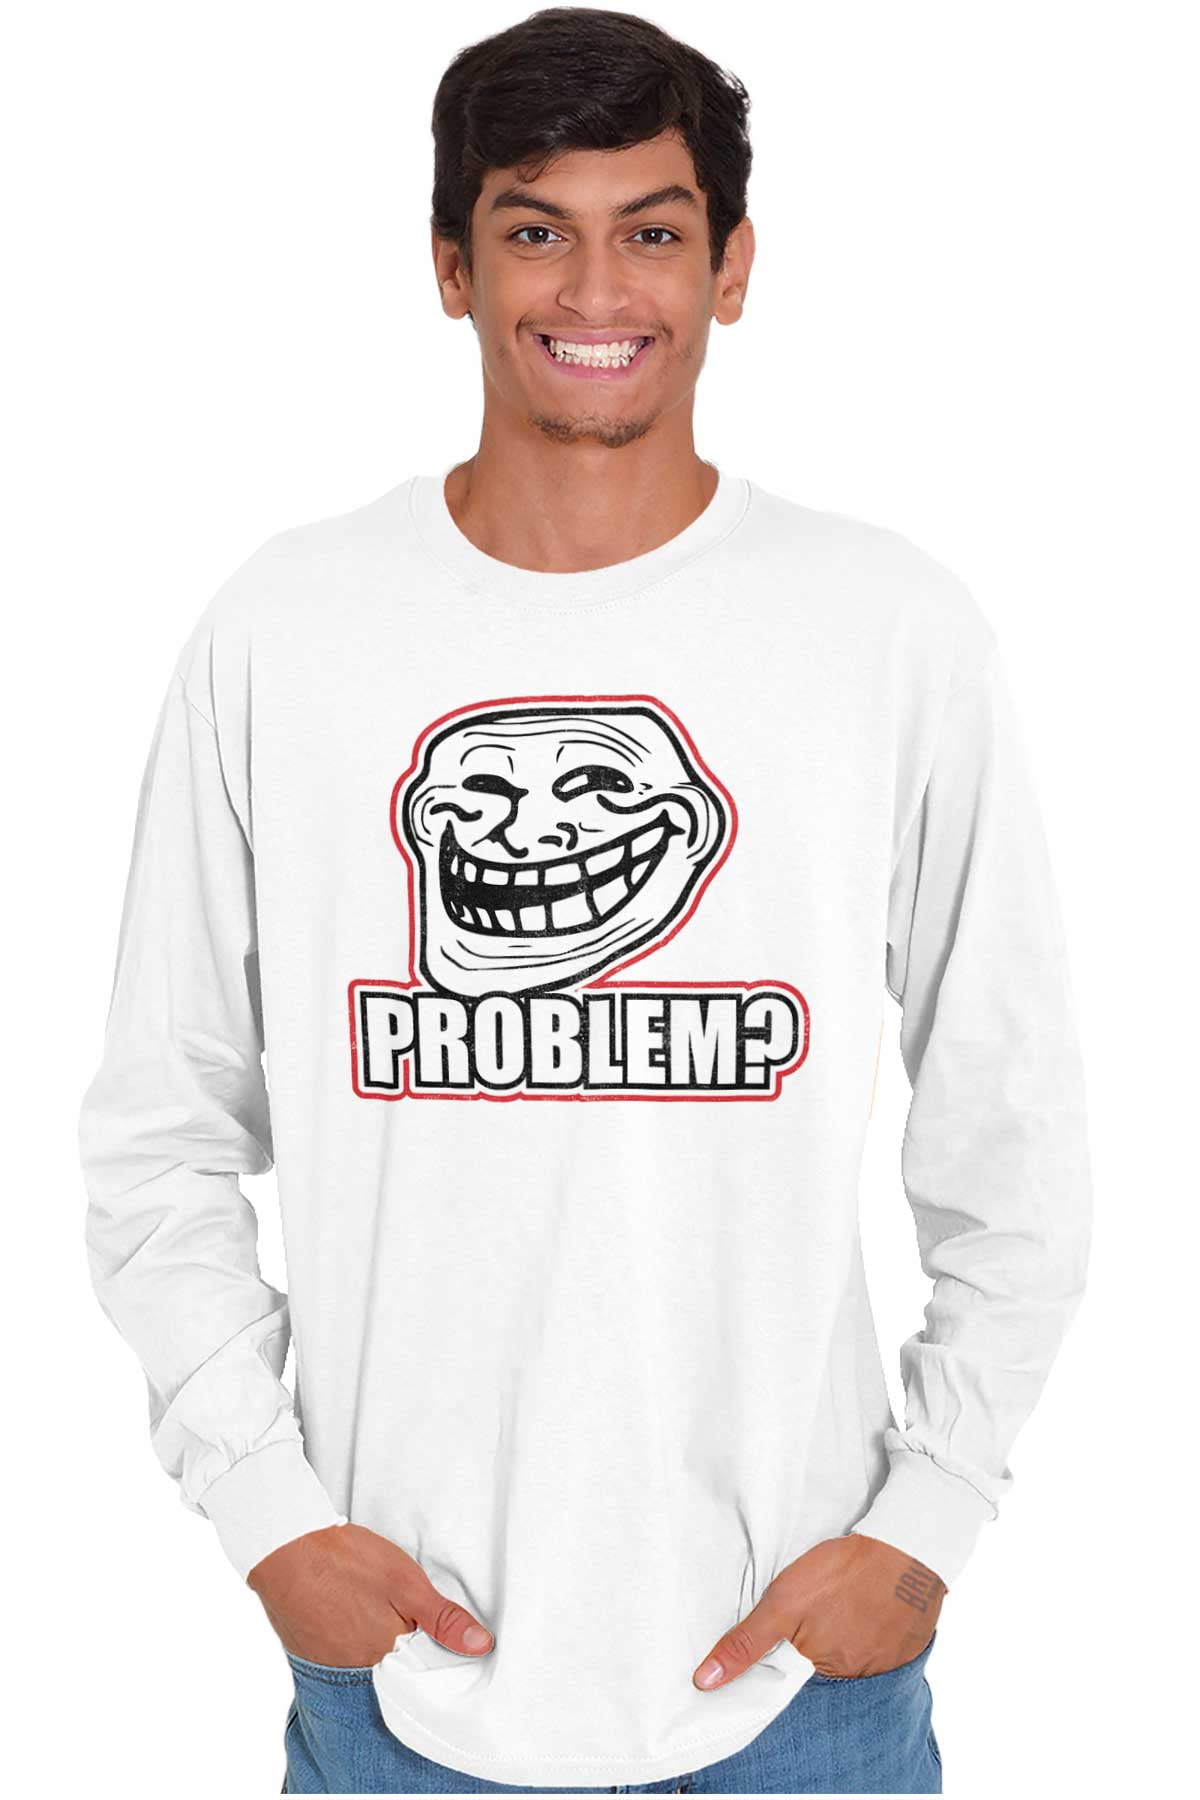  Troll Face Meme Problem Funny Mens Women Kids Boys Girls  T-Shirt : Clothing, Shoes & Jewelry